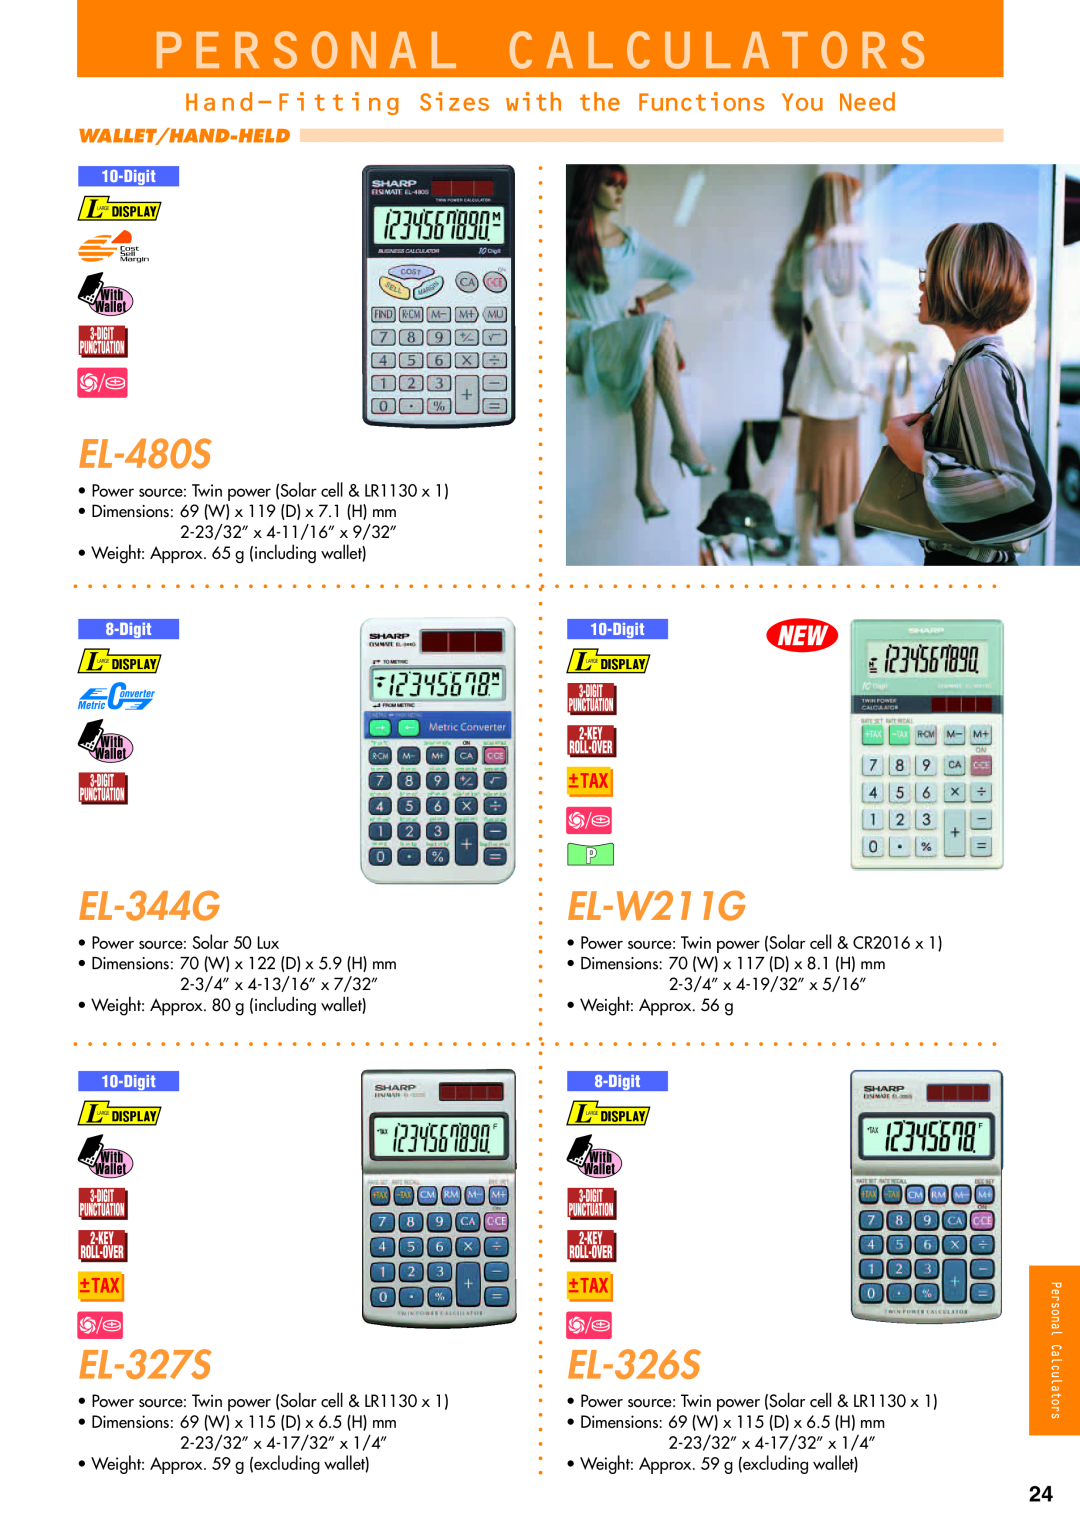 Sharp electronic calculator Personal Calculators, EL-480S, EL-344G, EL-W211G, EL-327S, EL-326S, Wallet/Hand-Held, Digit 